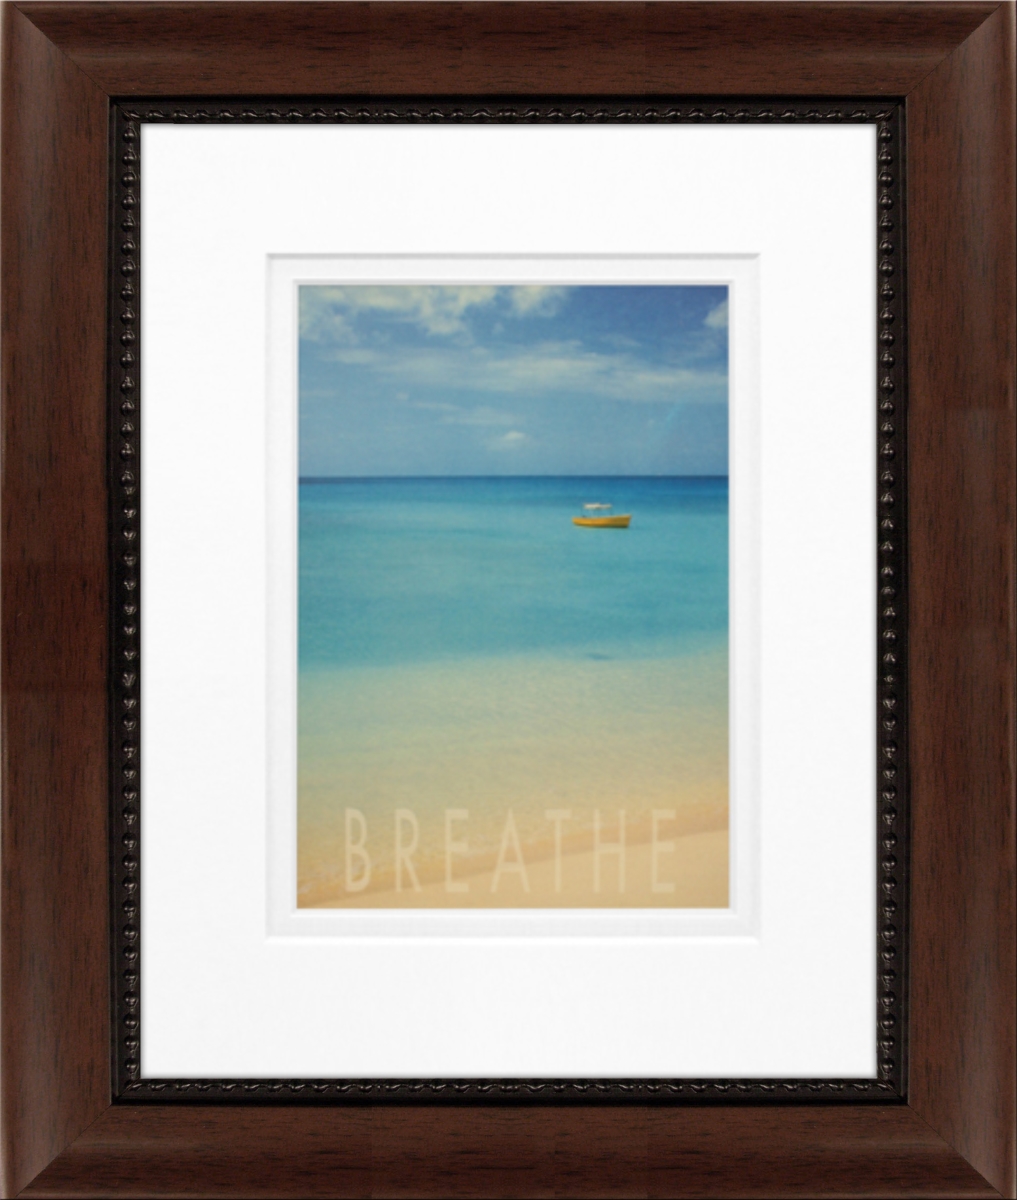 55350 8 X 10 In. Blue Seas Of Barbados Photo Frame